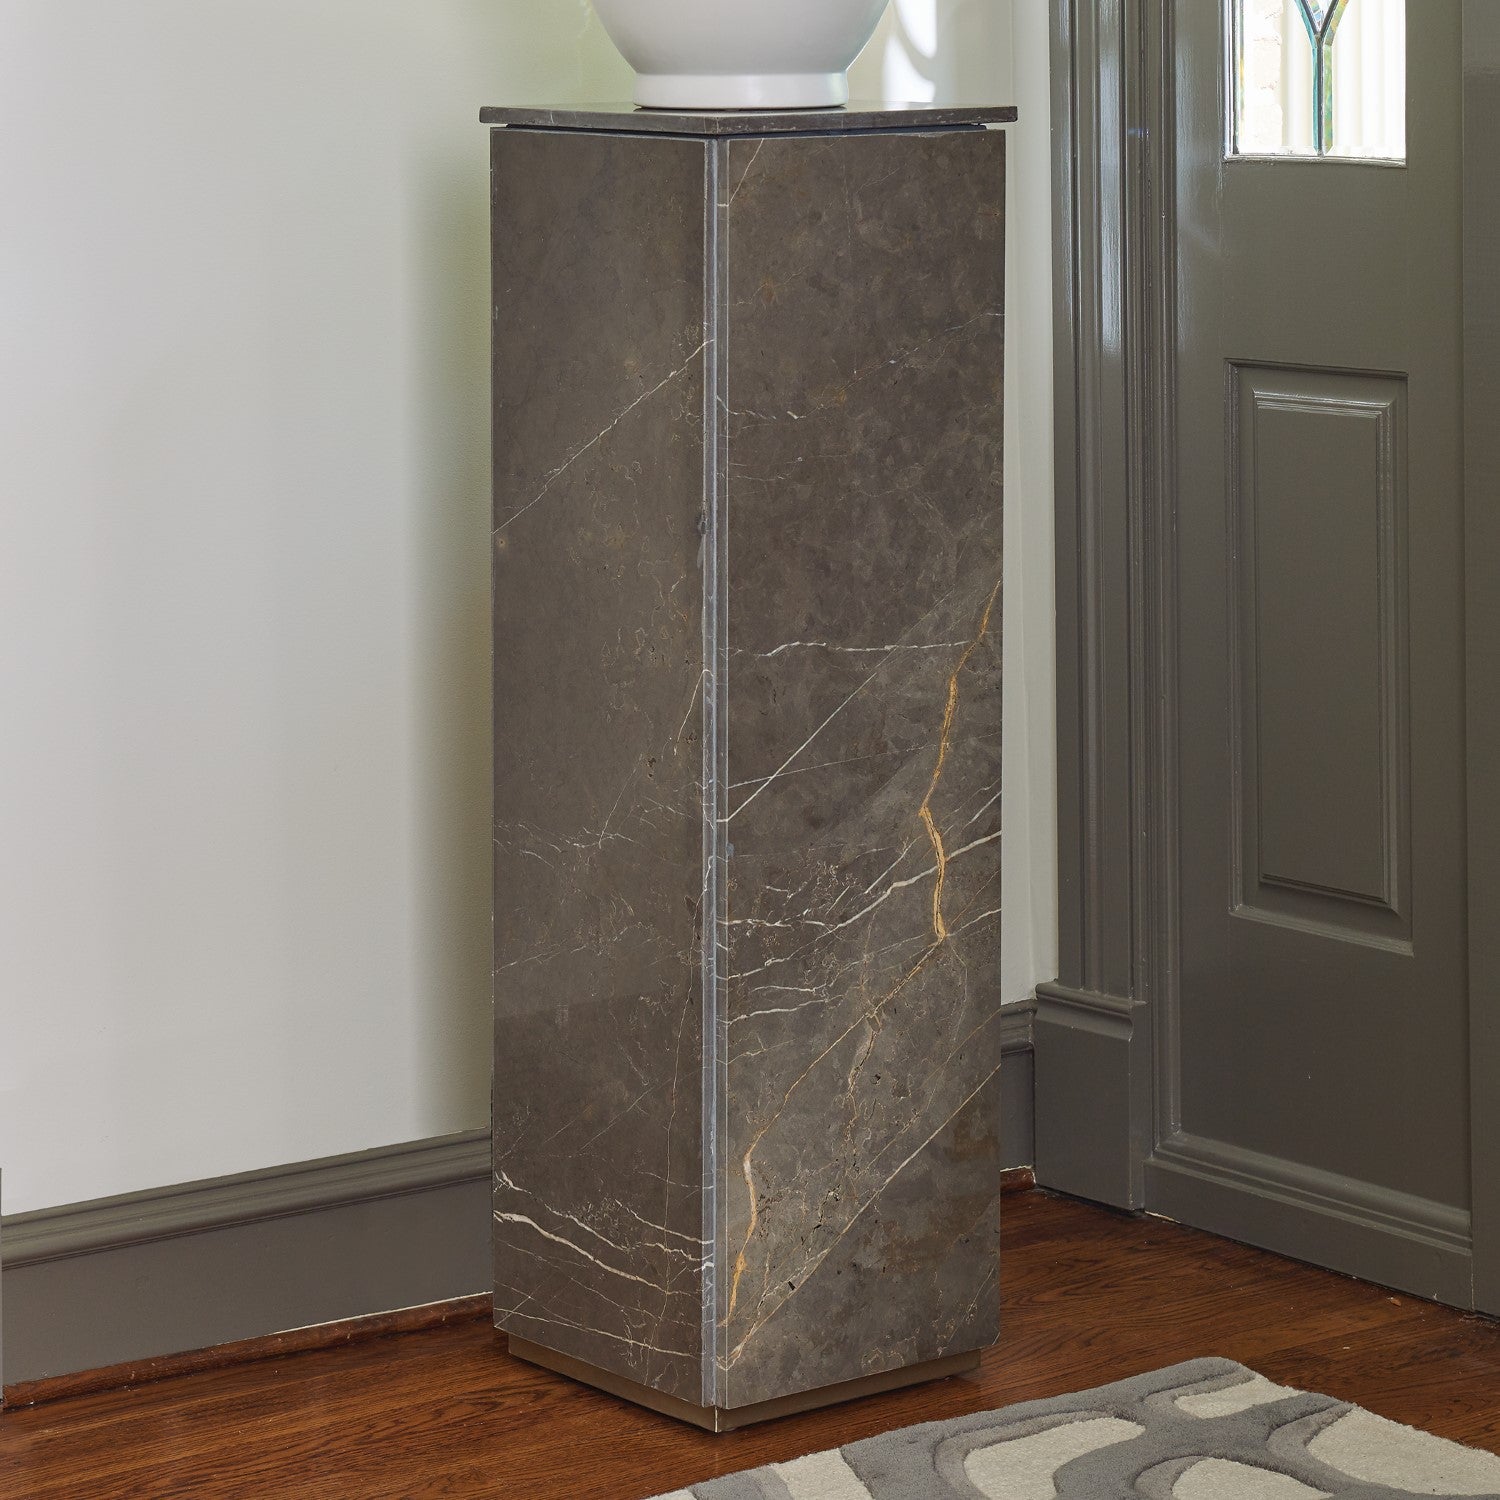 Graffito Marble Pedestal - Grats Decor Interior Design & Build Inc.